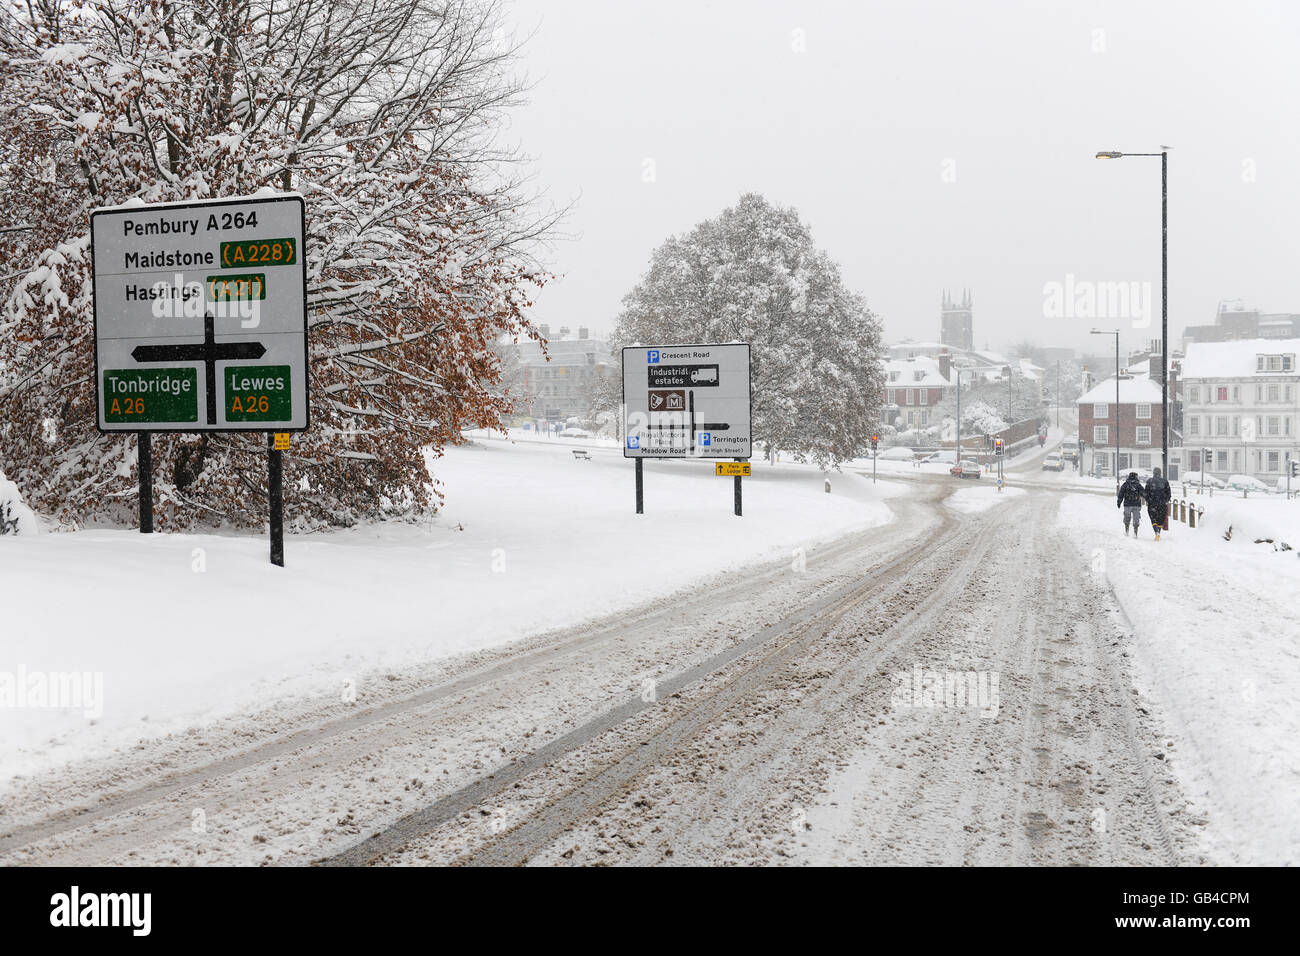 Tunbridge Wells, Kent, UK traffic sign posts on a snowy street Stock Photo